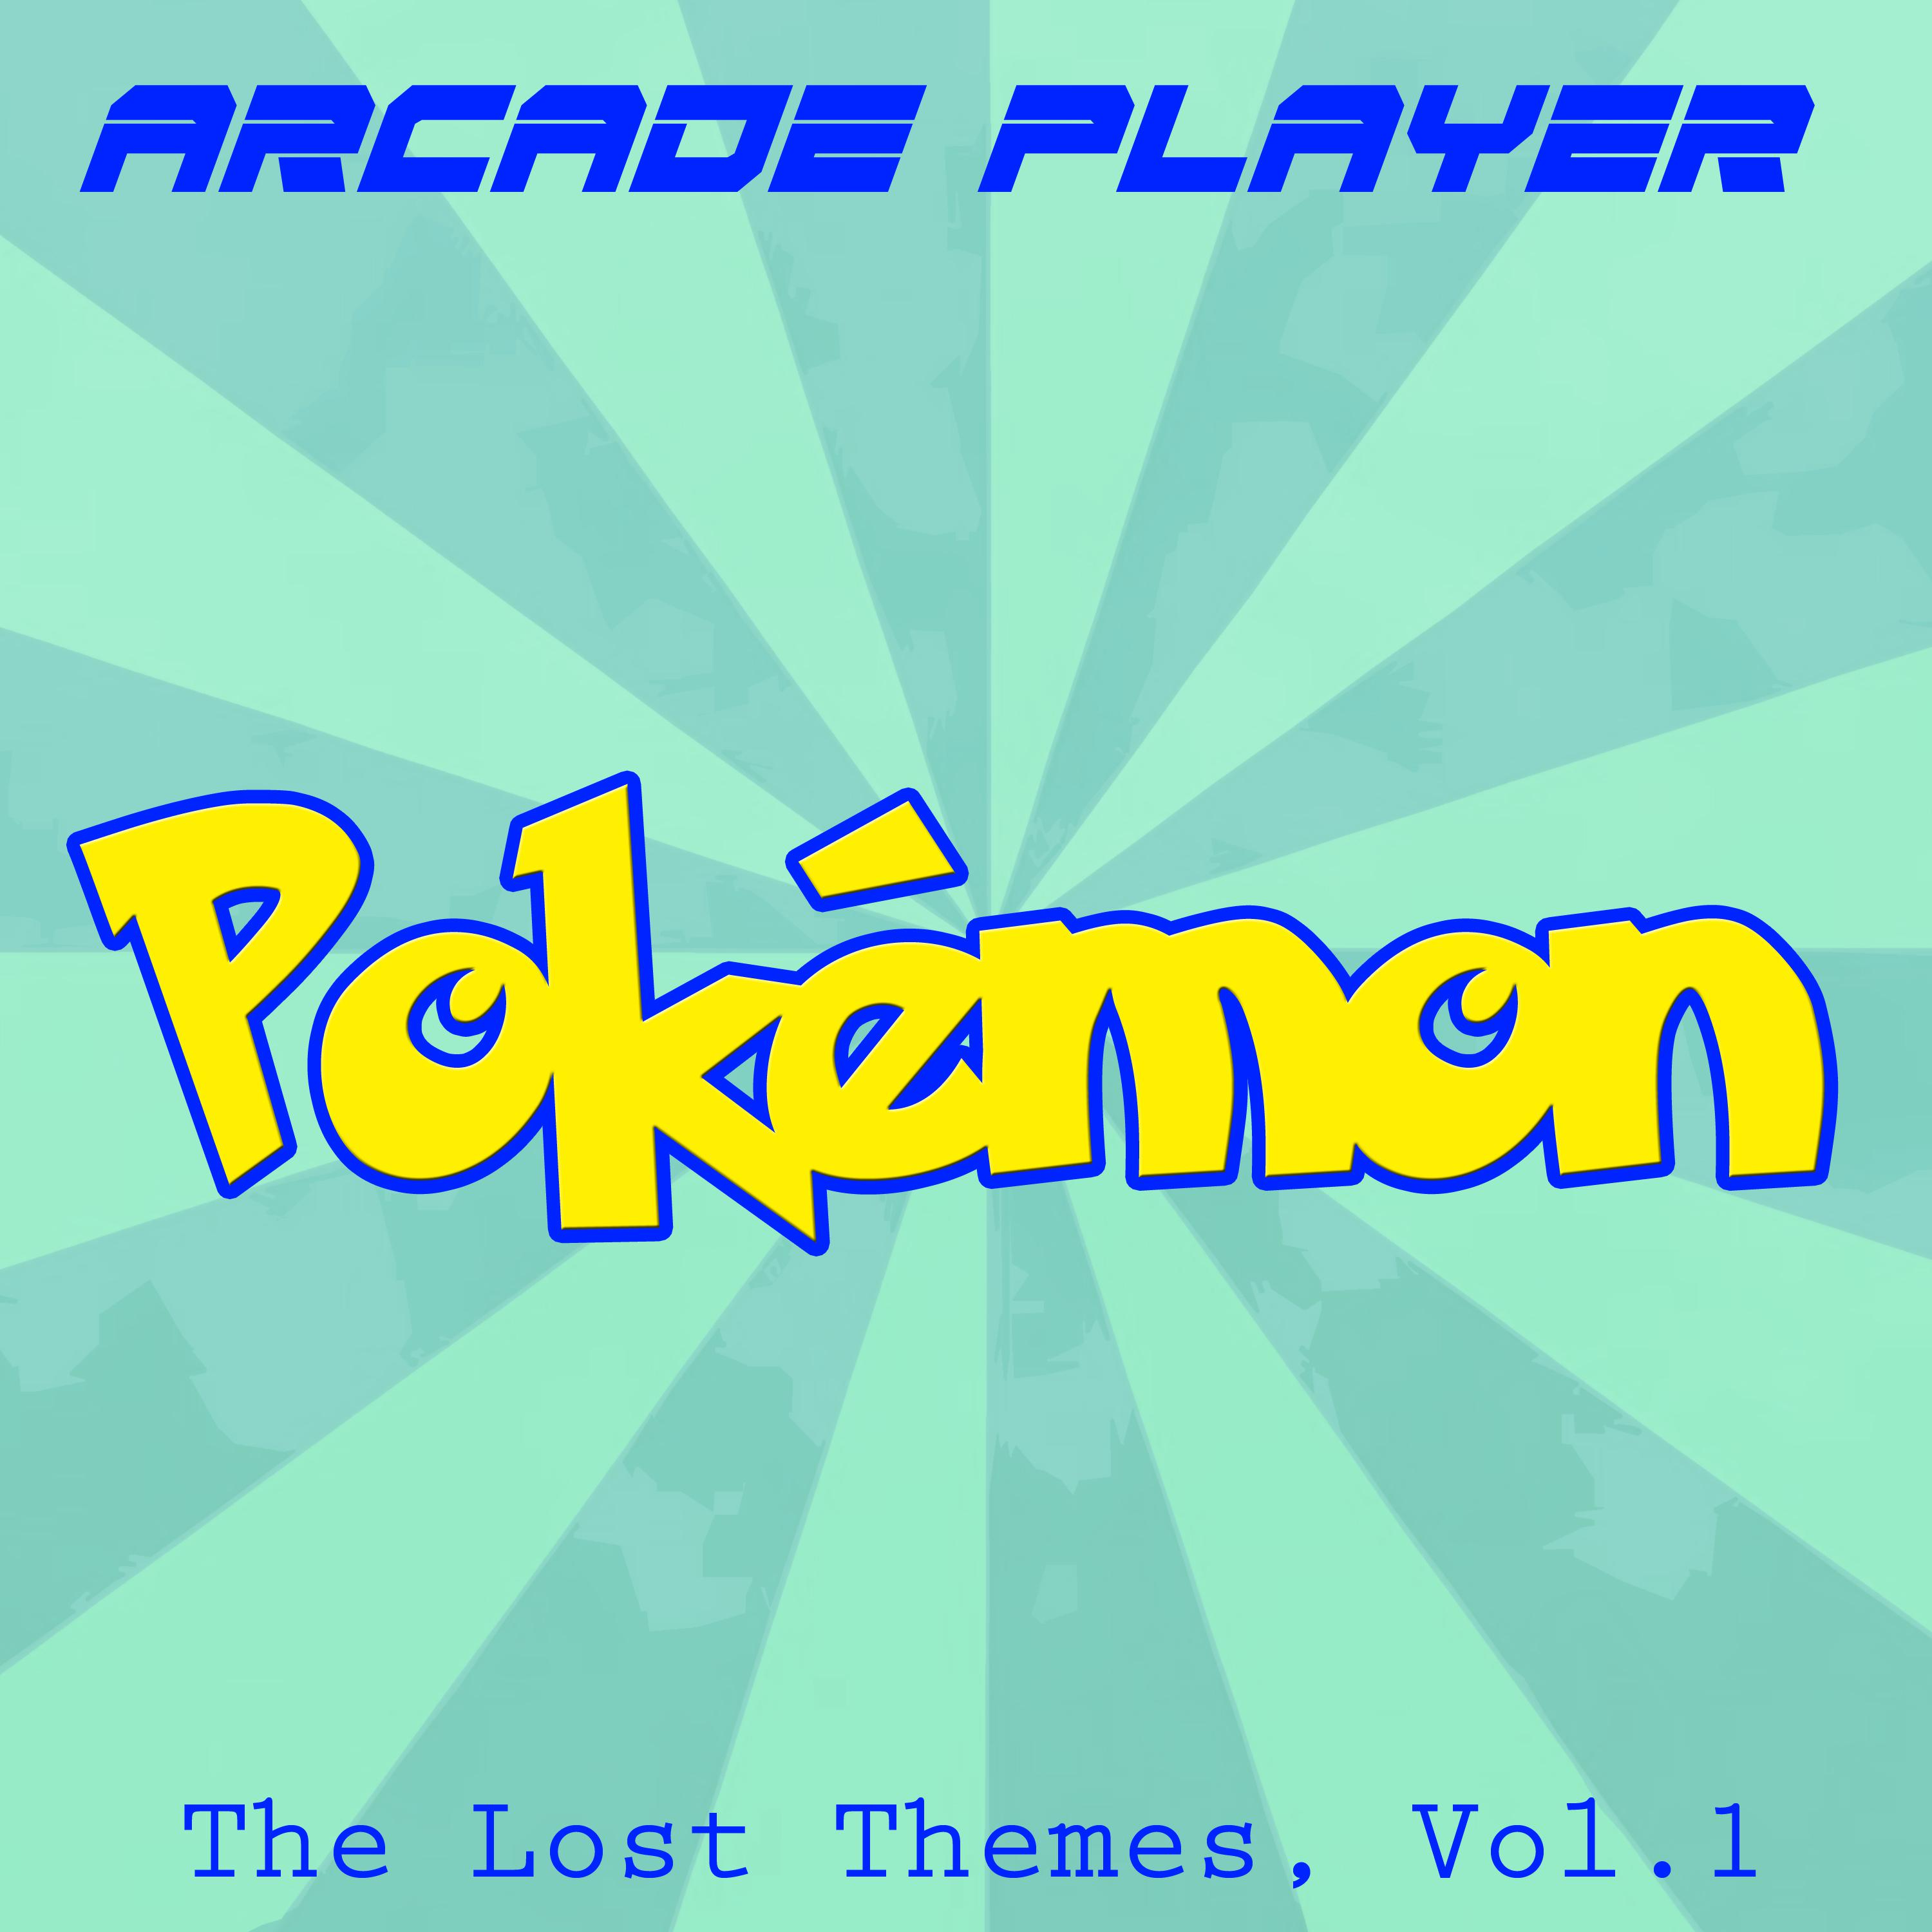 Poke mon: The Lost Themes, Vol. 1